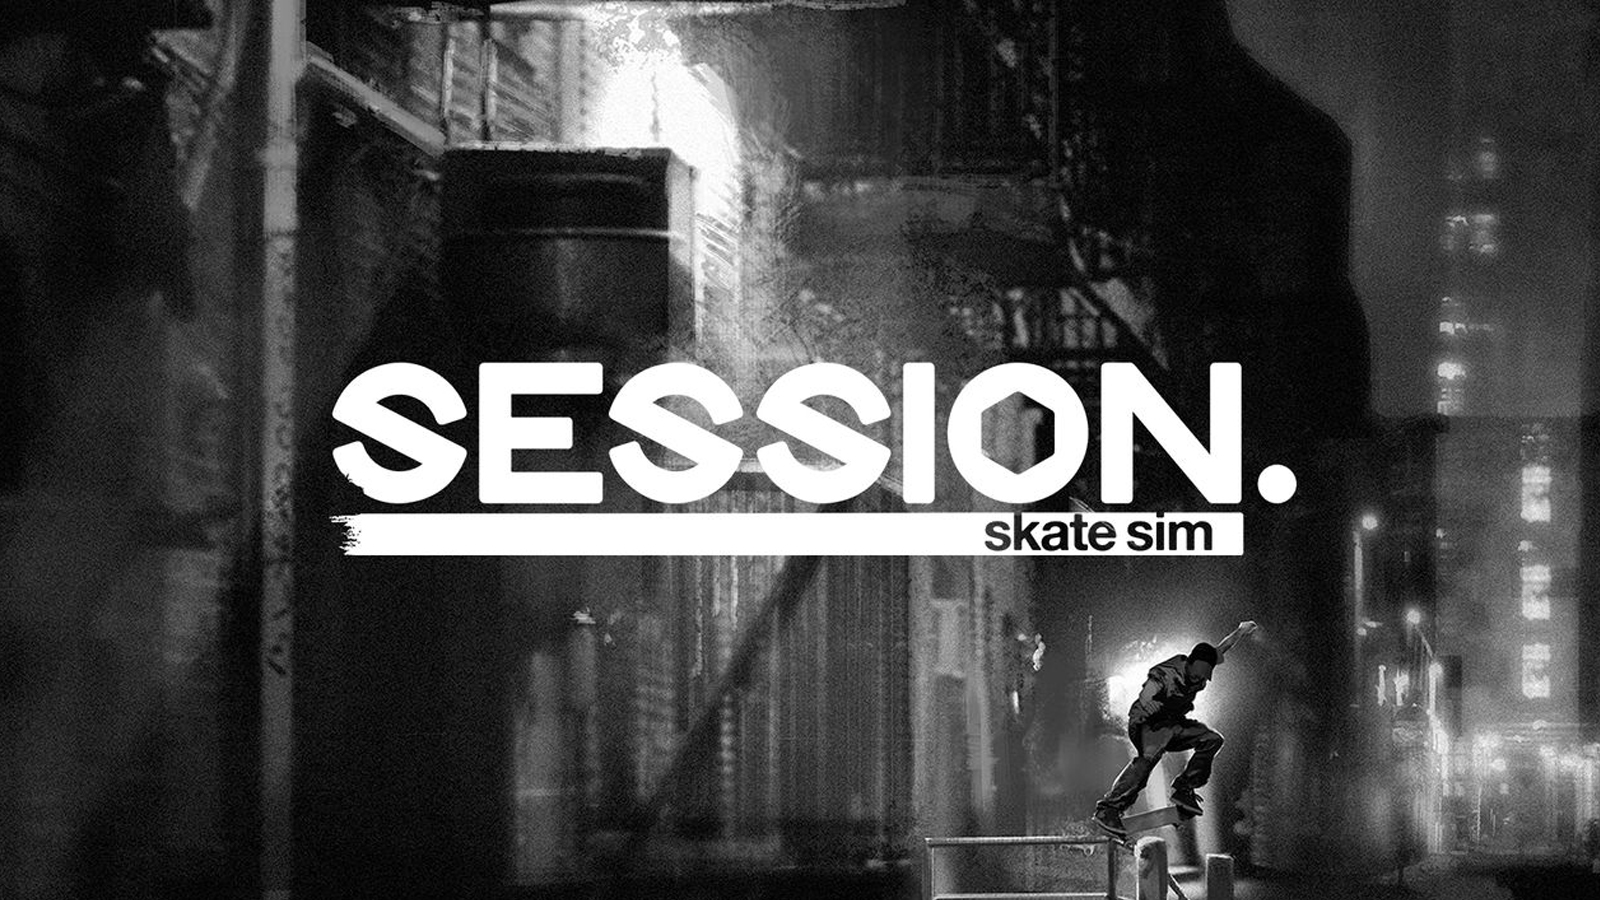 Gaming sessions v 0.2. Session: Skate SIM. Сессия: скейт-симулятор. Session: Skate SIM обложка. Session картинки.